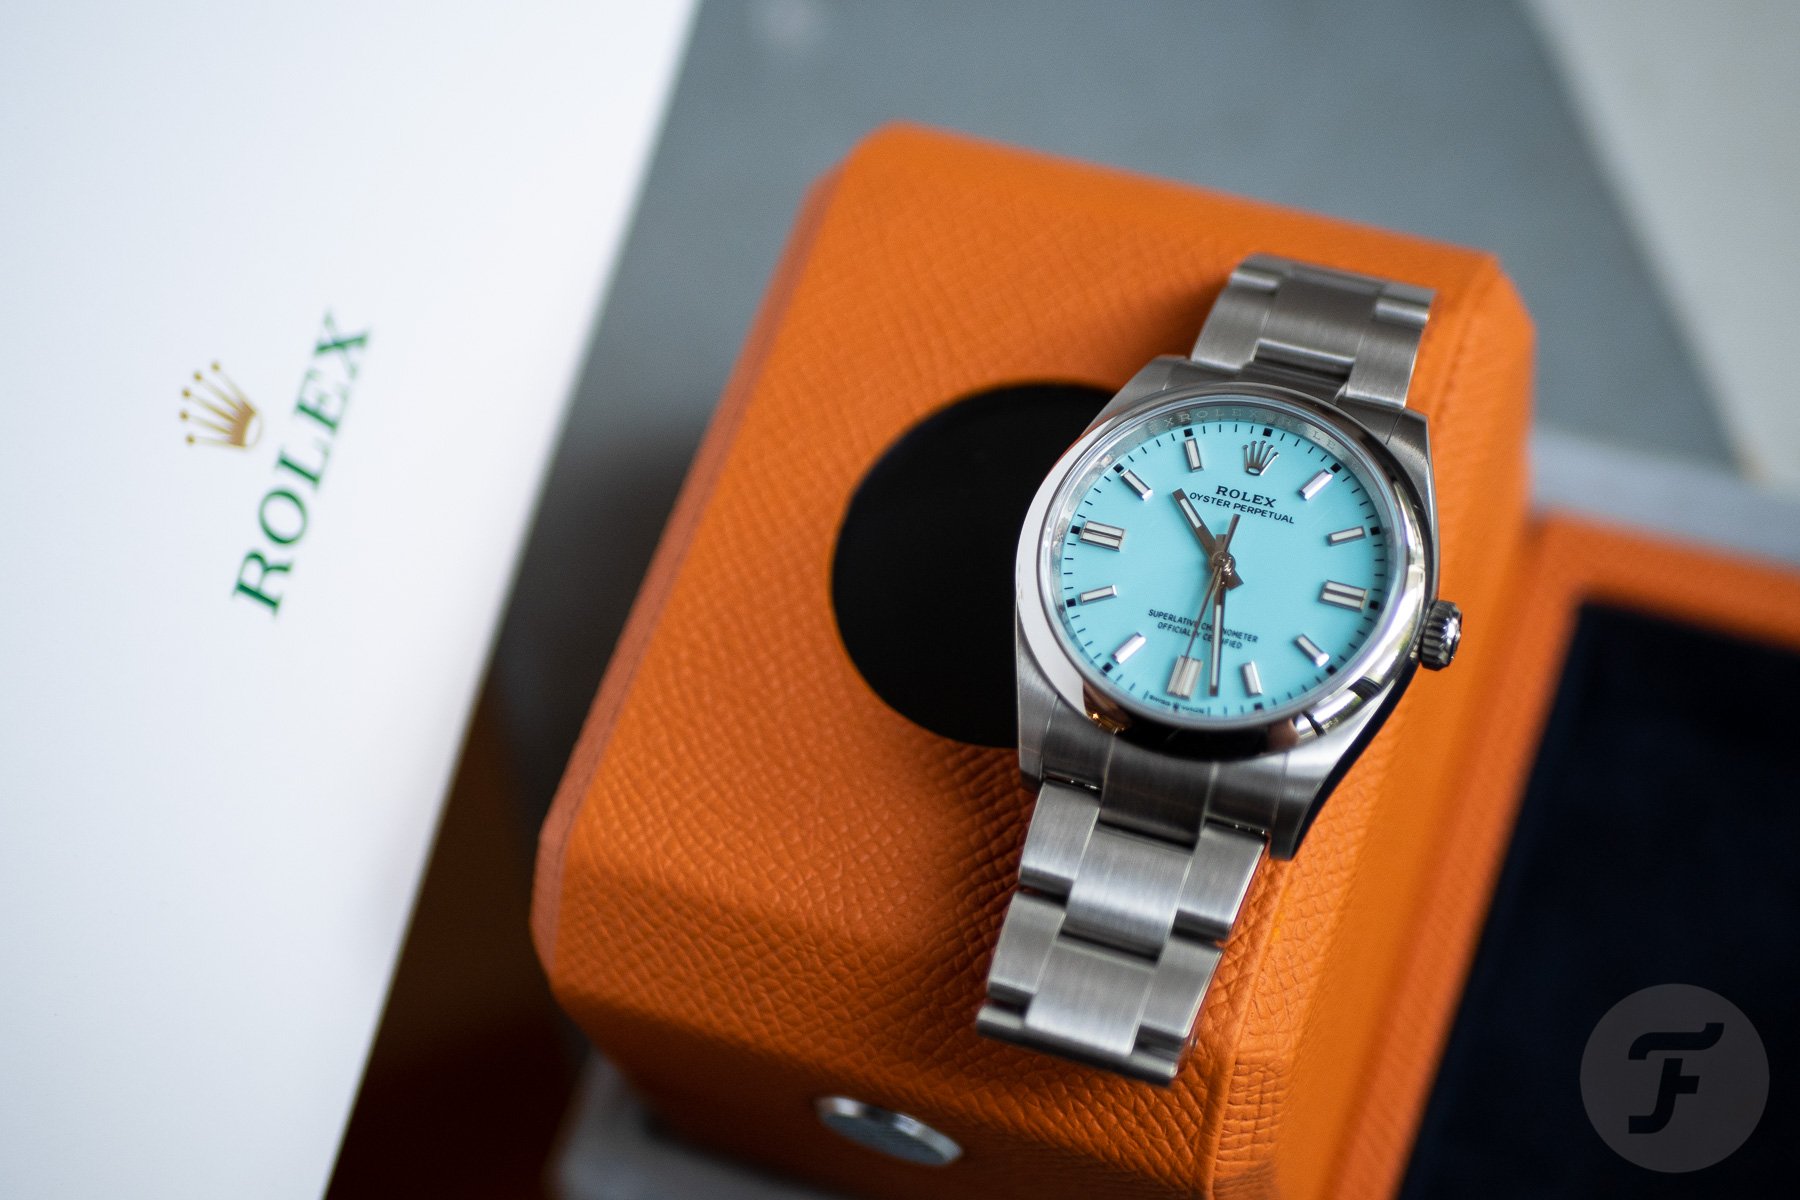 Watches of Switzerland Opens Multibrand Showroom at American Dream